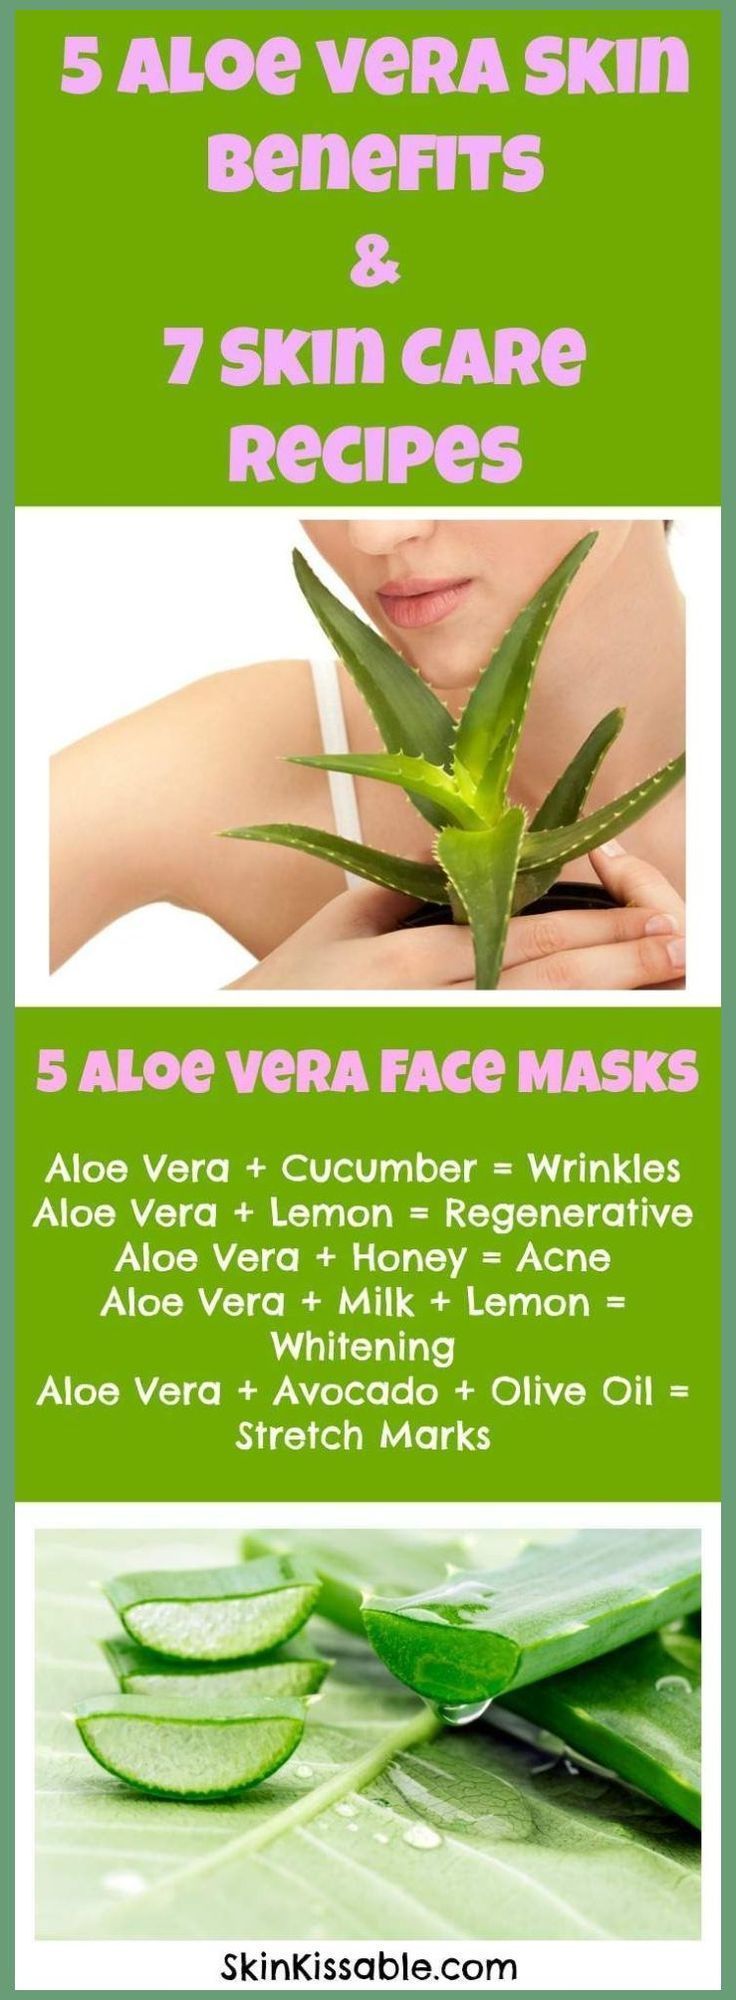 10 diy Face Mask aloe vera ideas